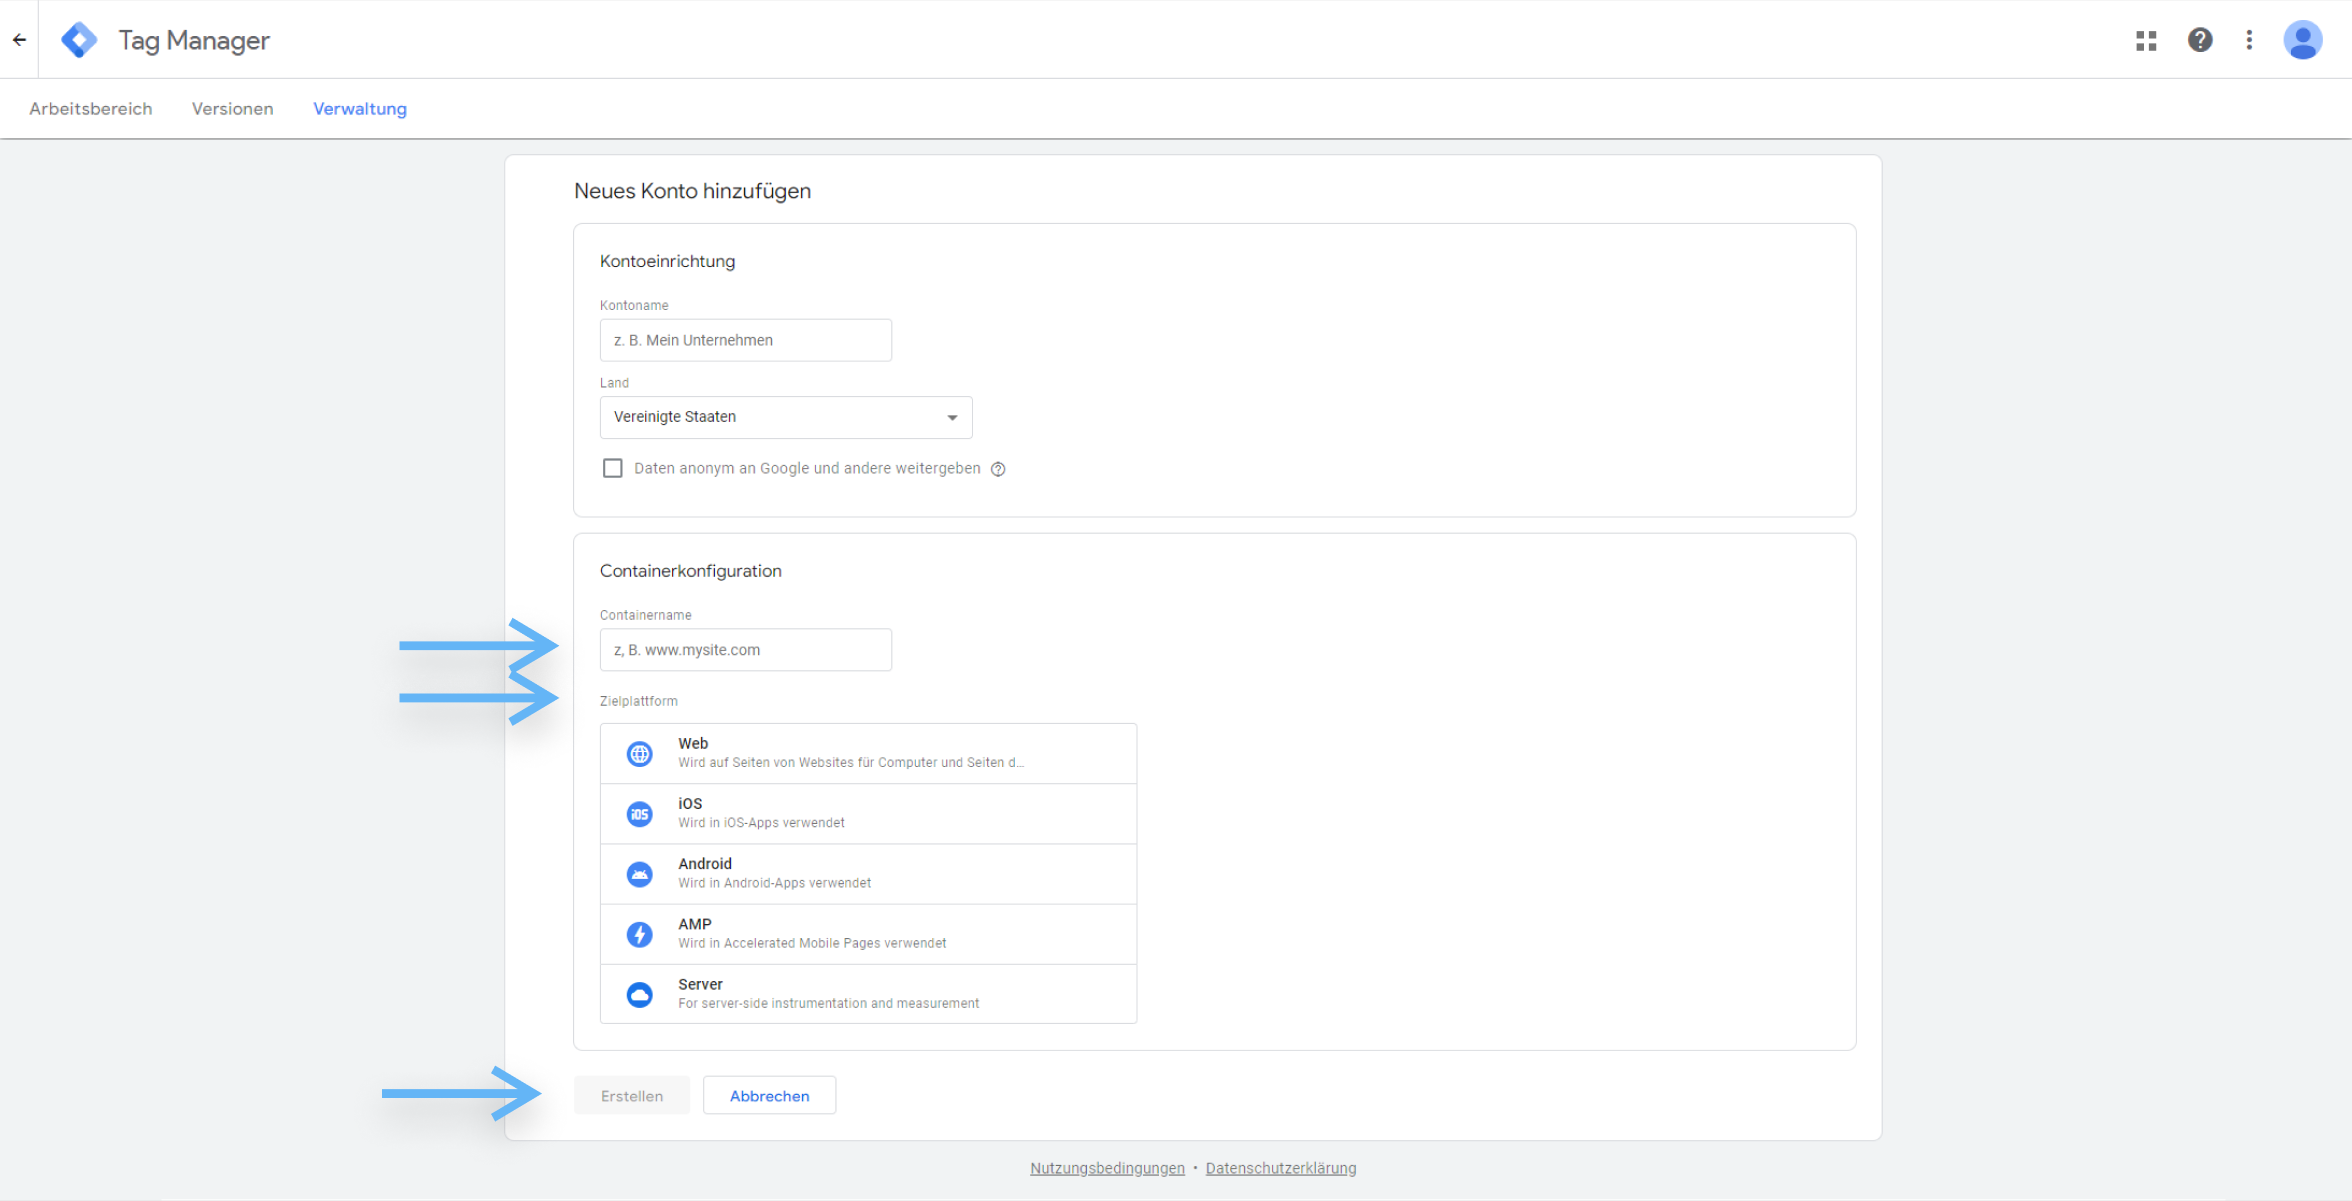 atrava - Google Tag Manager Anleitung - Containerkonfiguration